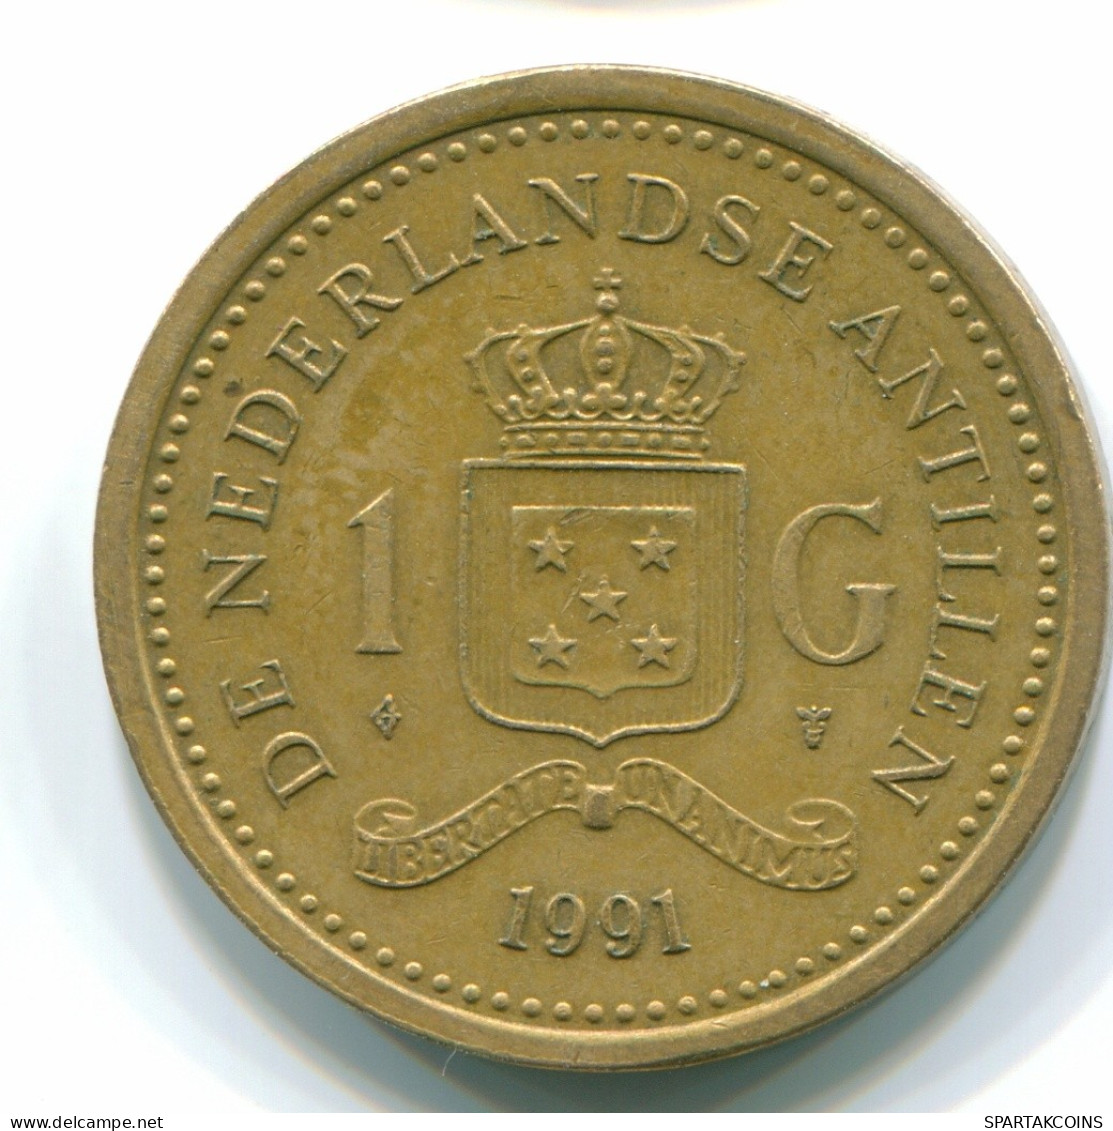 1 GULDEN 1991 NETHERLANDS ANTILLES Aureate Steel Colonial Coin #S12117.U.A - Antilles Néerlandaises